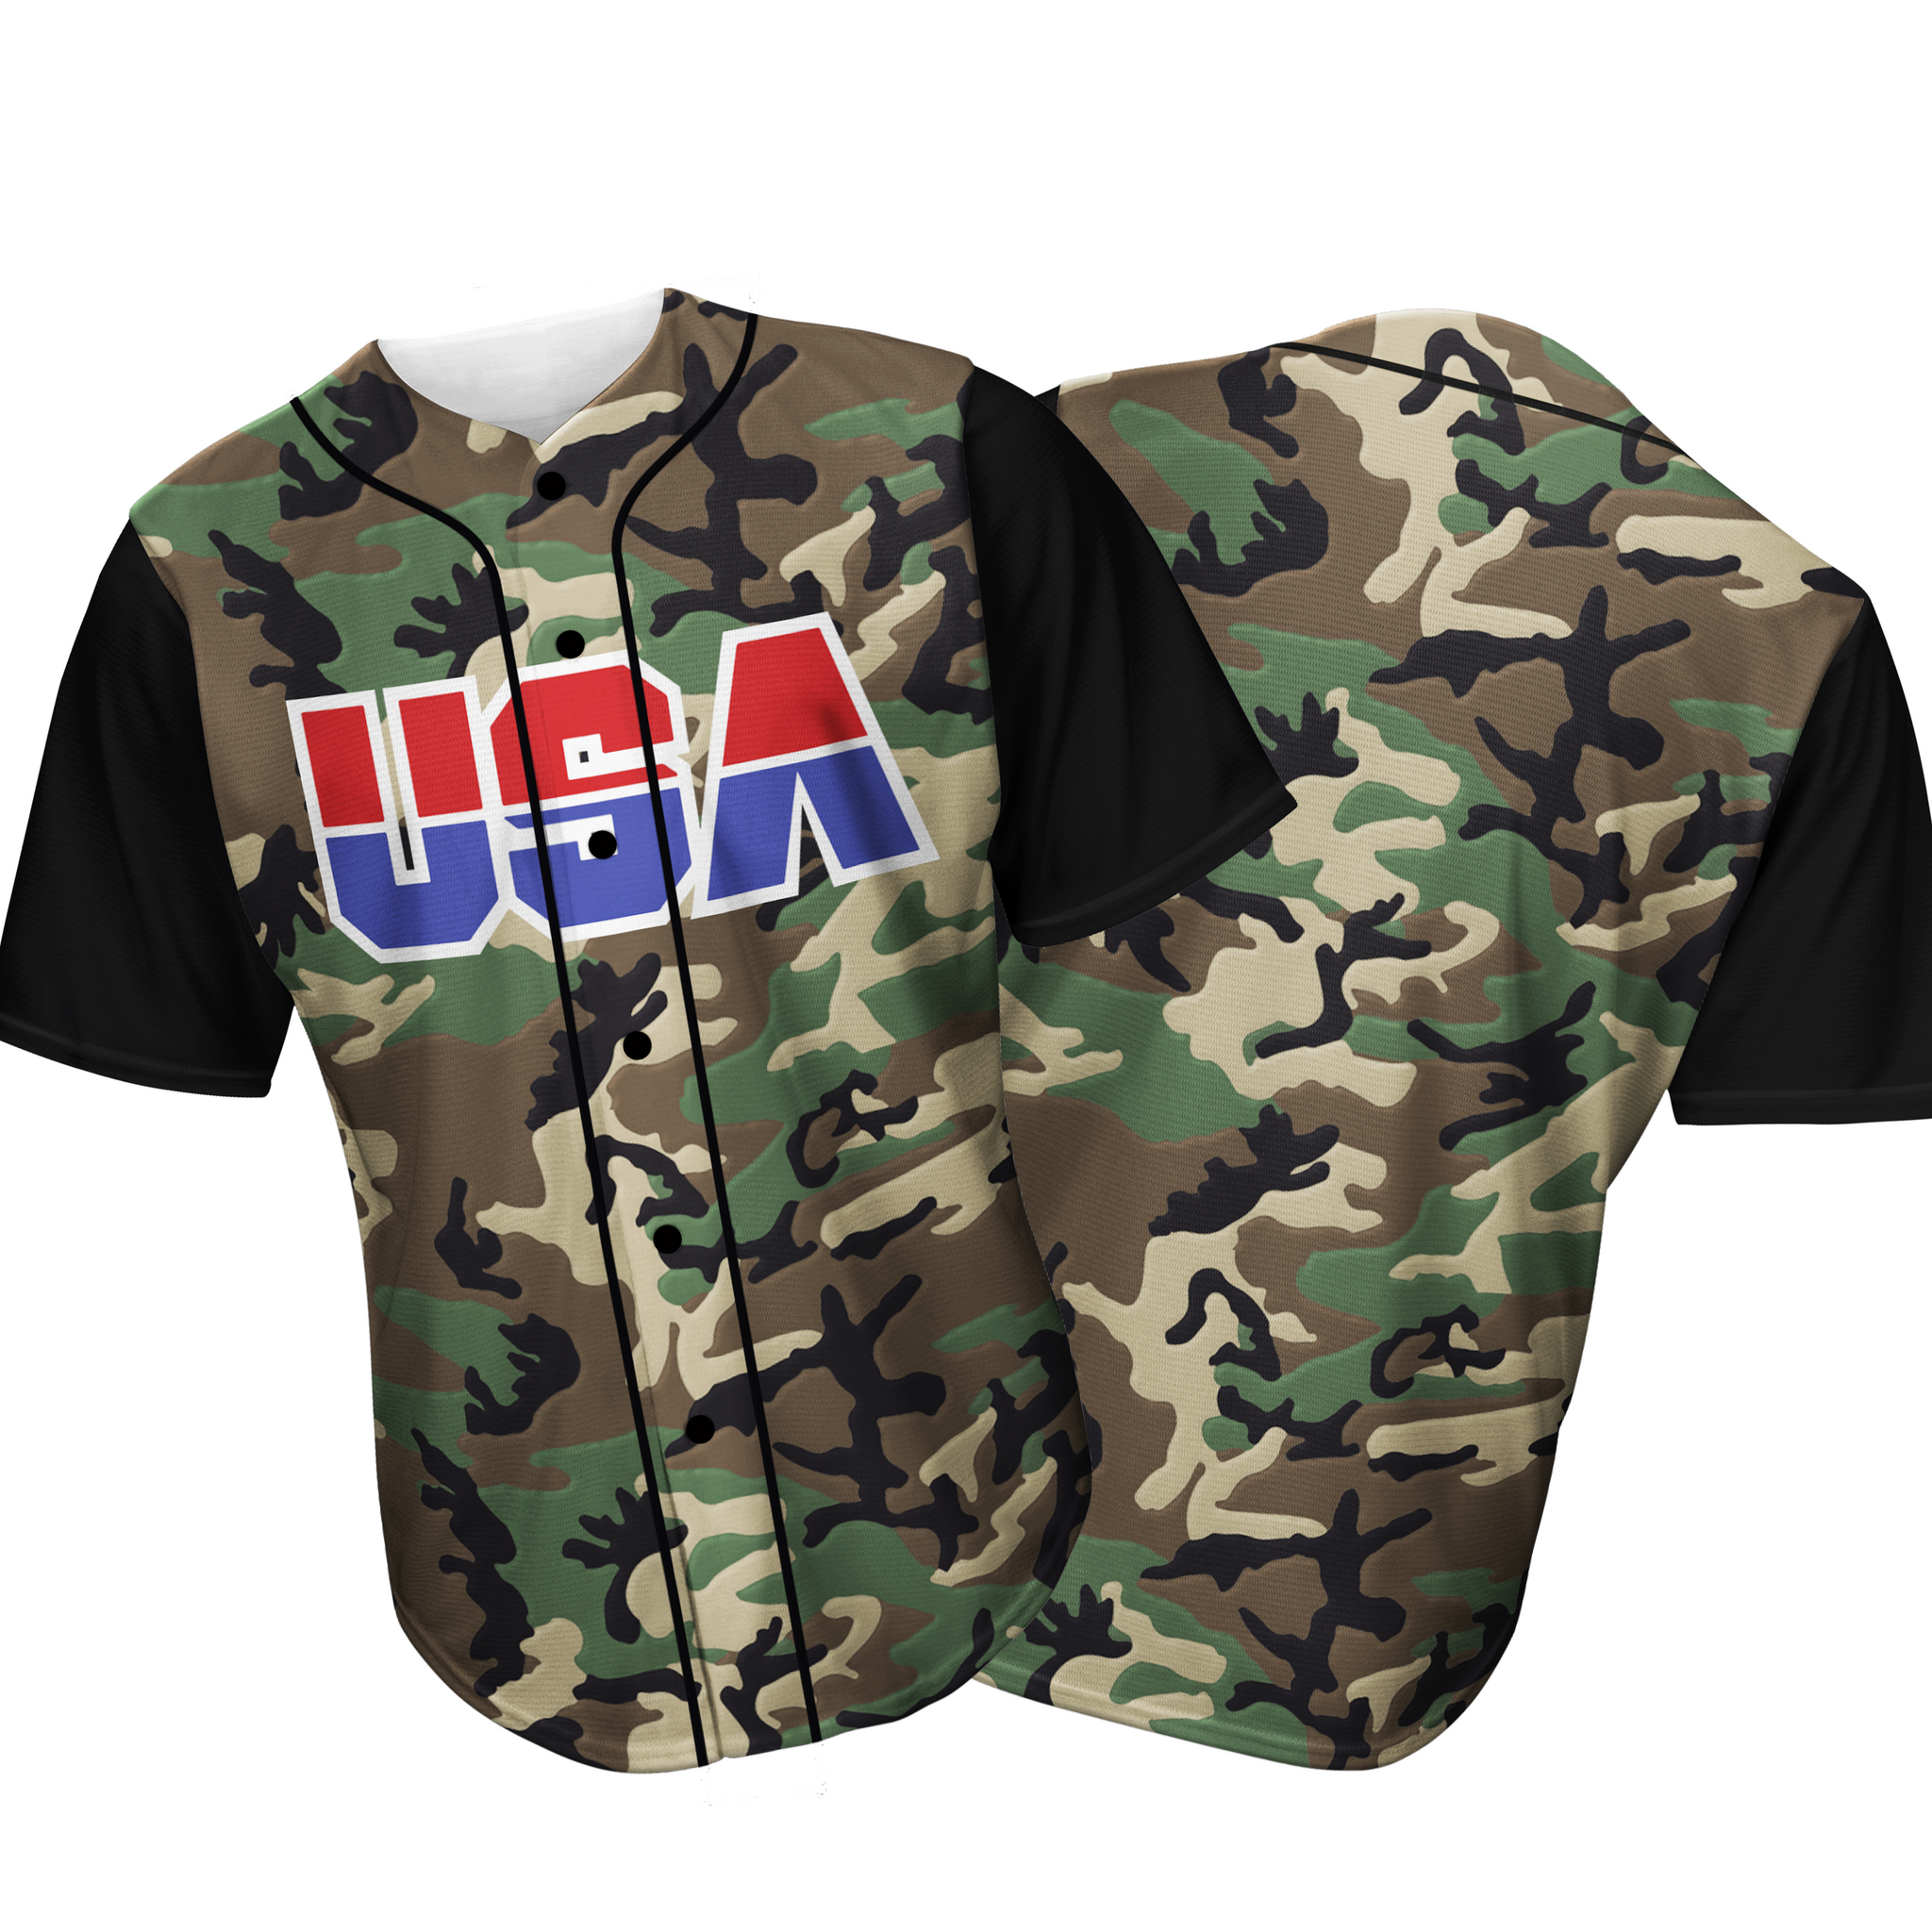 USA Baseball Jersey Camo (Green) - USA Drinking Team